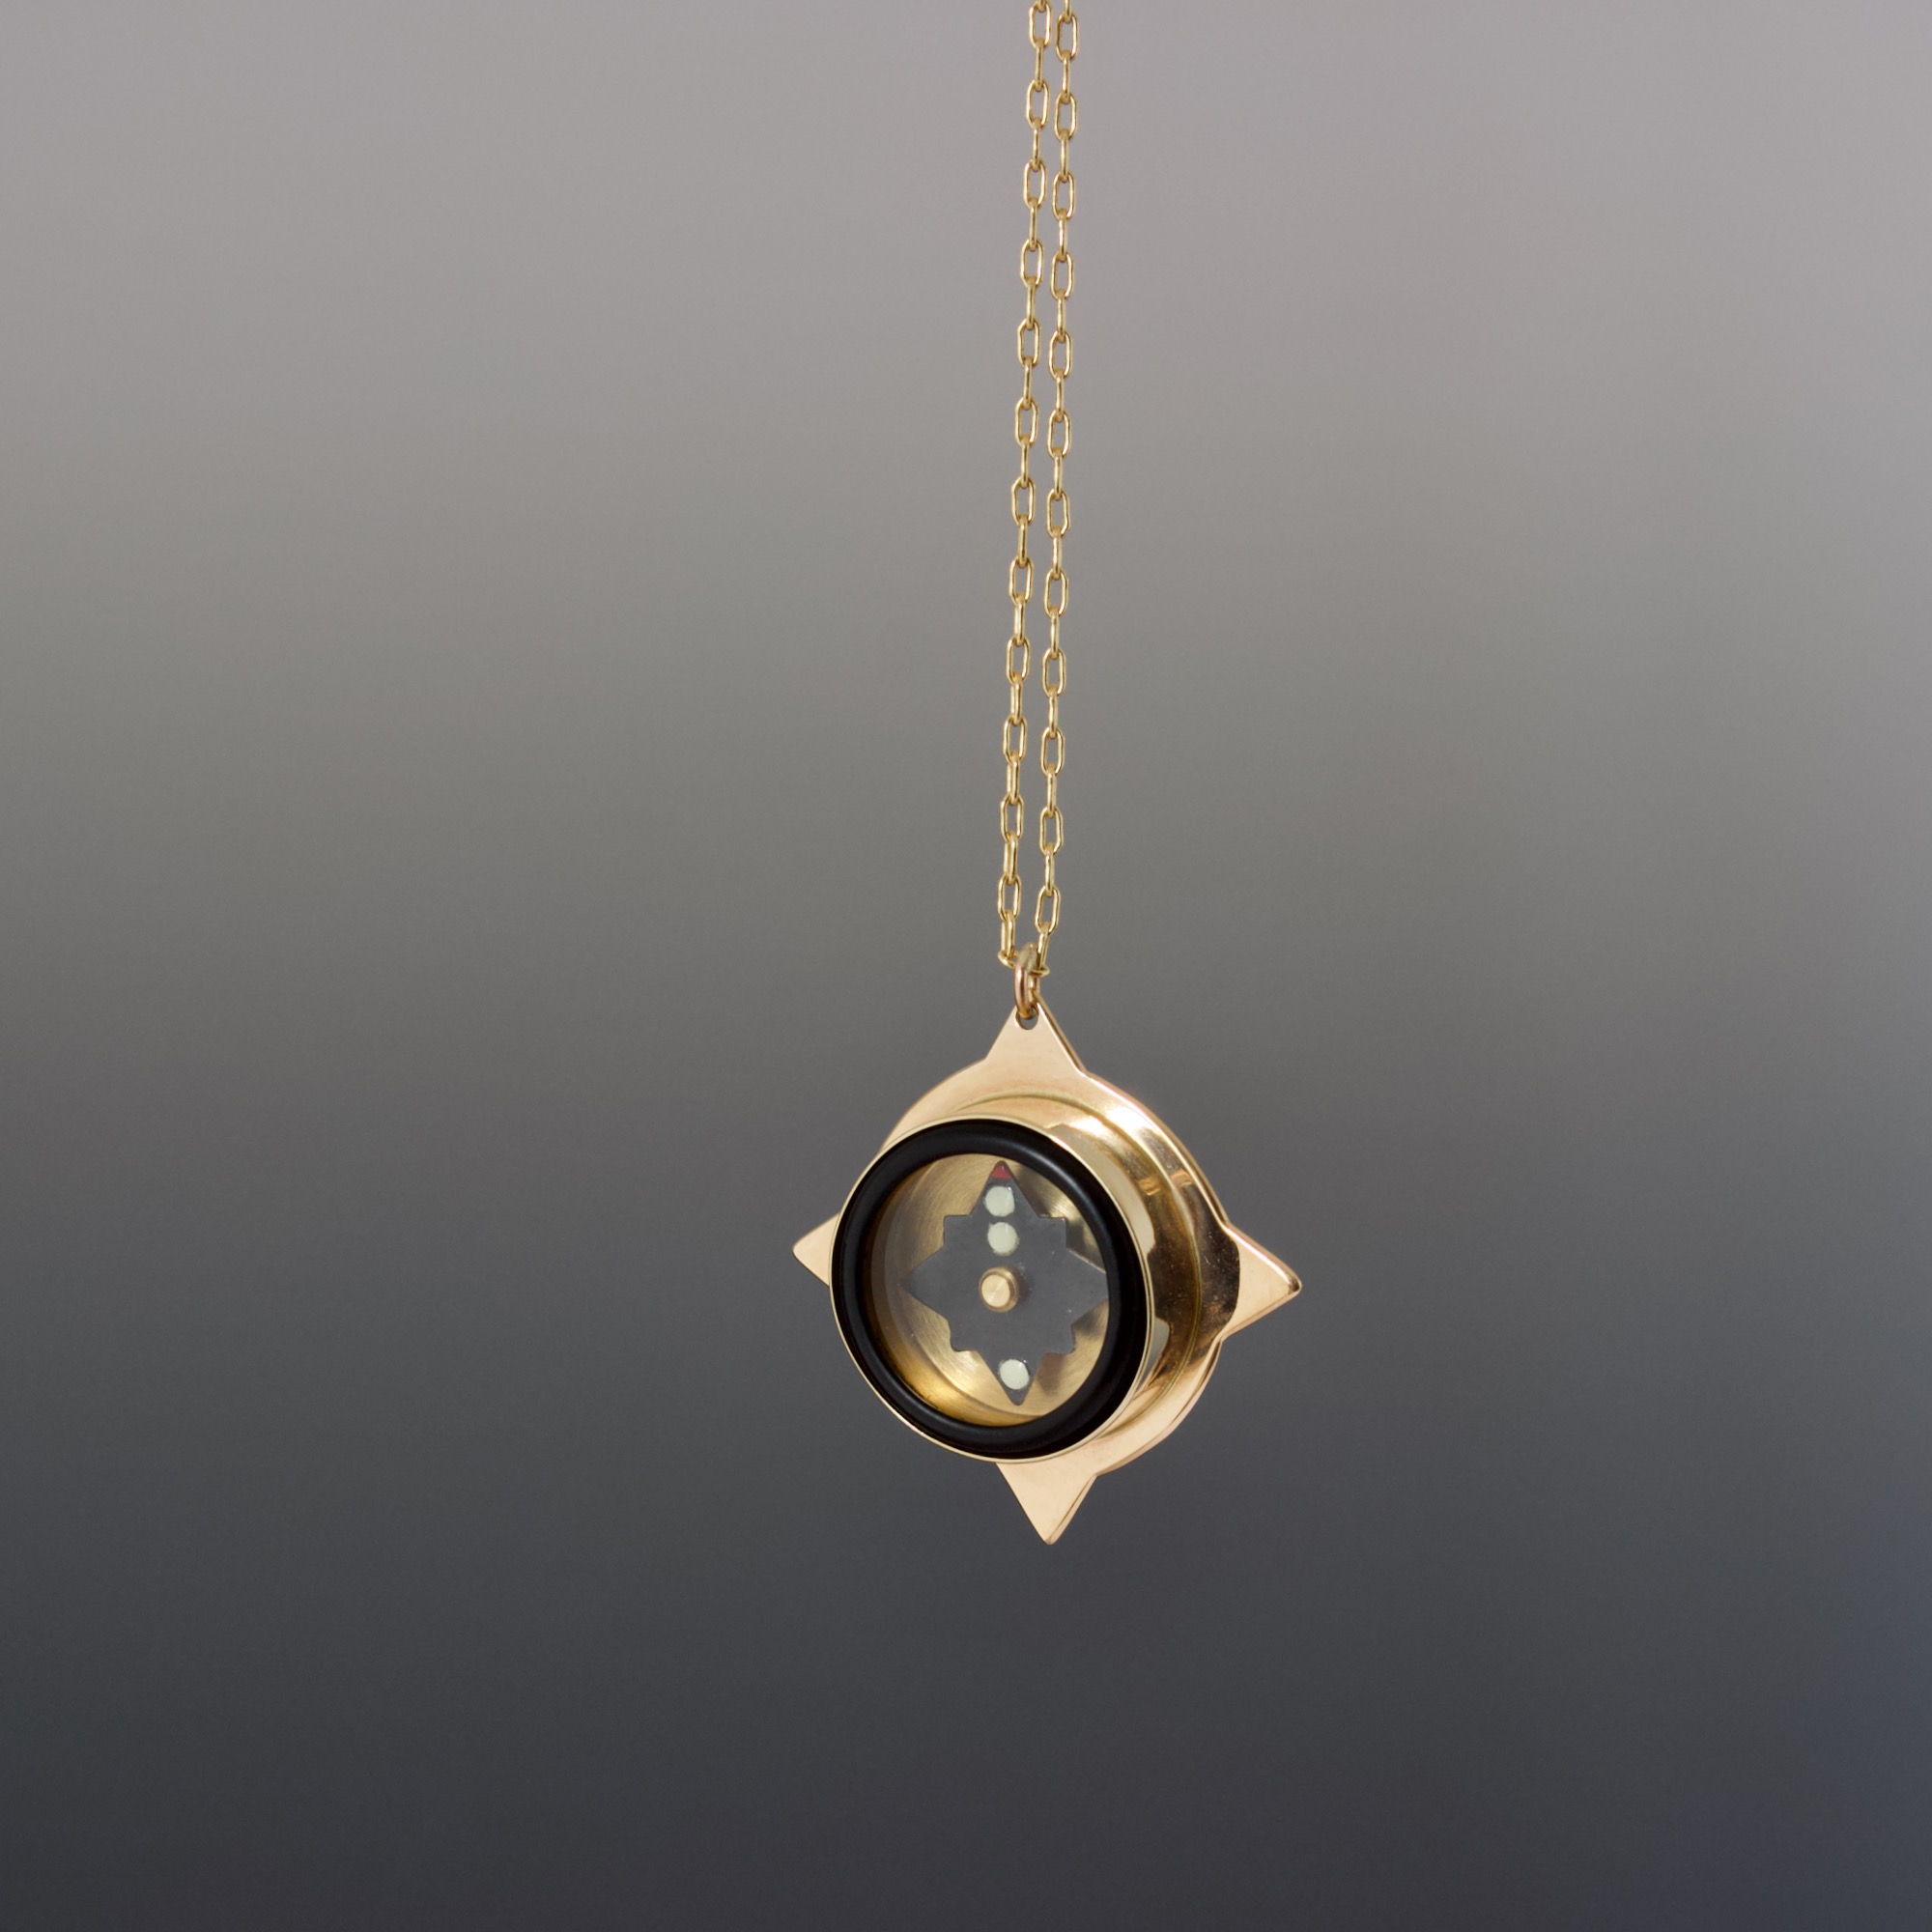 Handmade Compass Pendant Gold